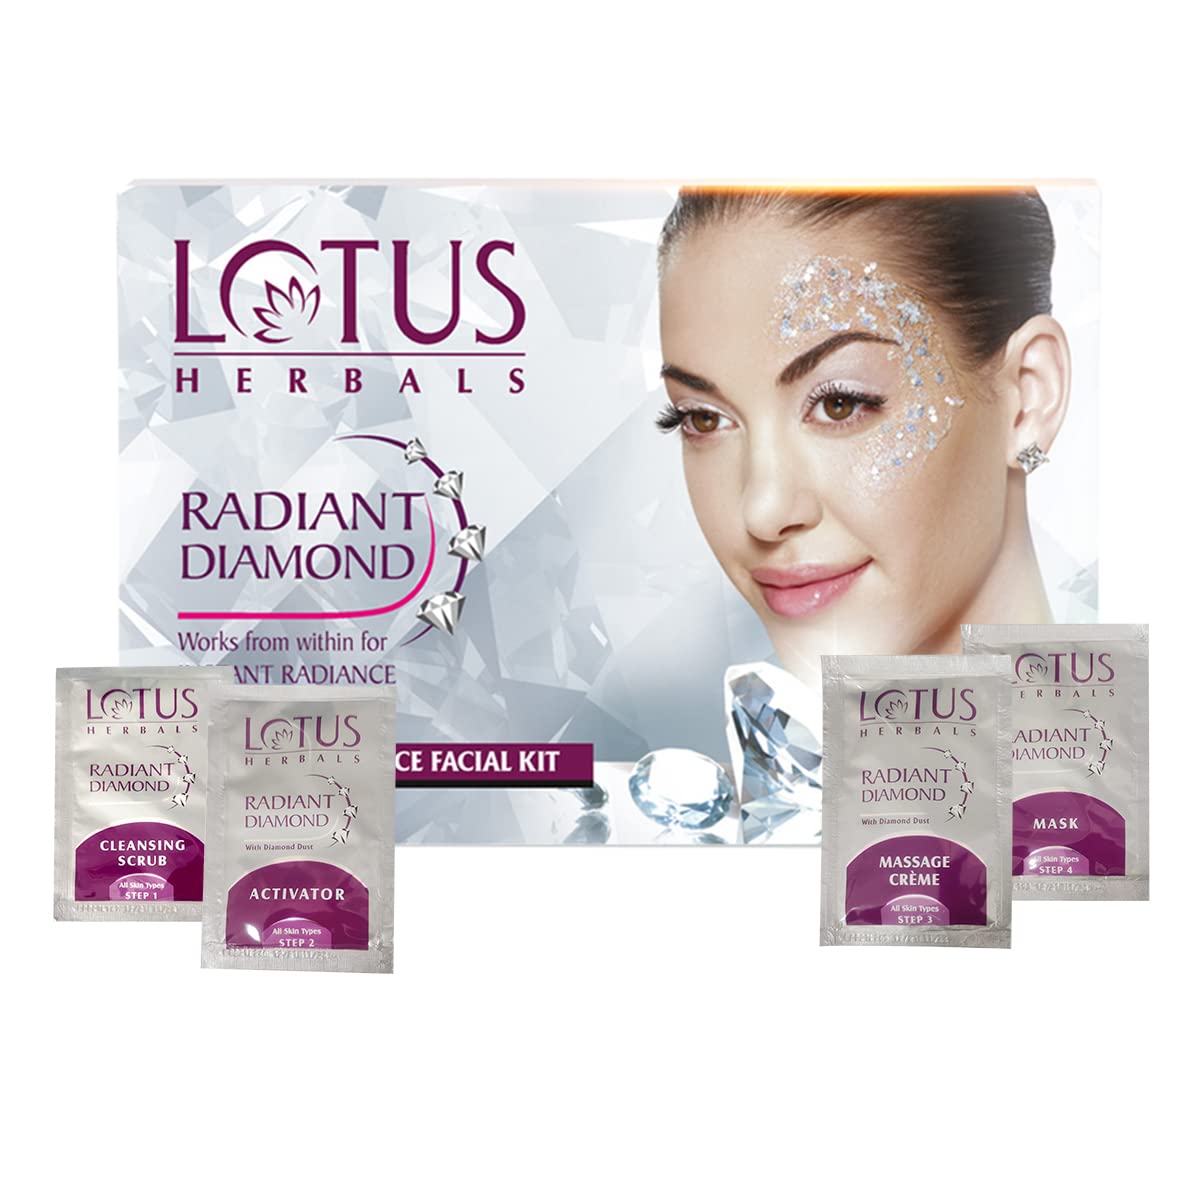 Lotus Herbals Radiant Diamond Cellular Radiance 1 Facial Kit - 37 GM